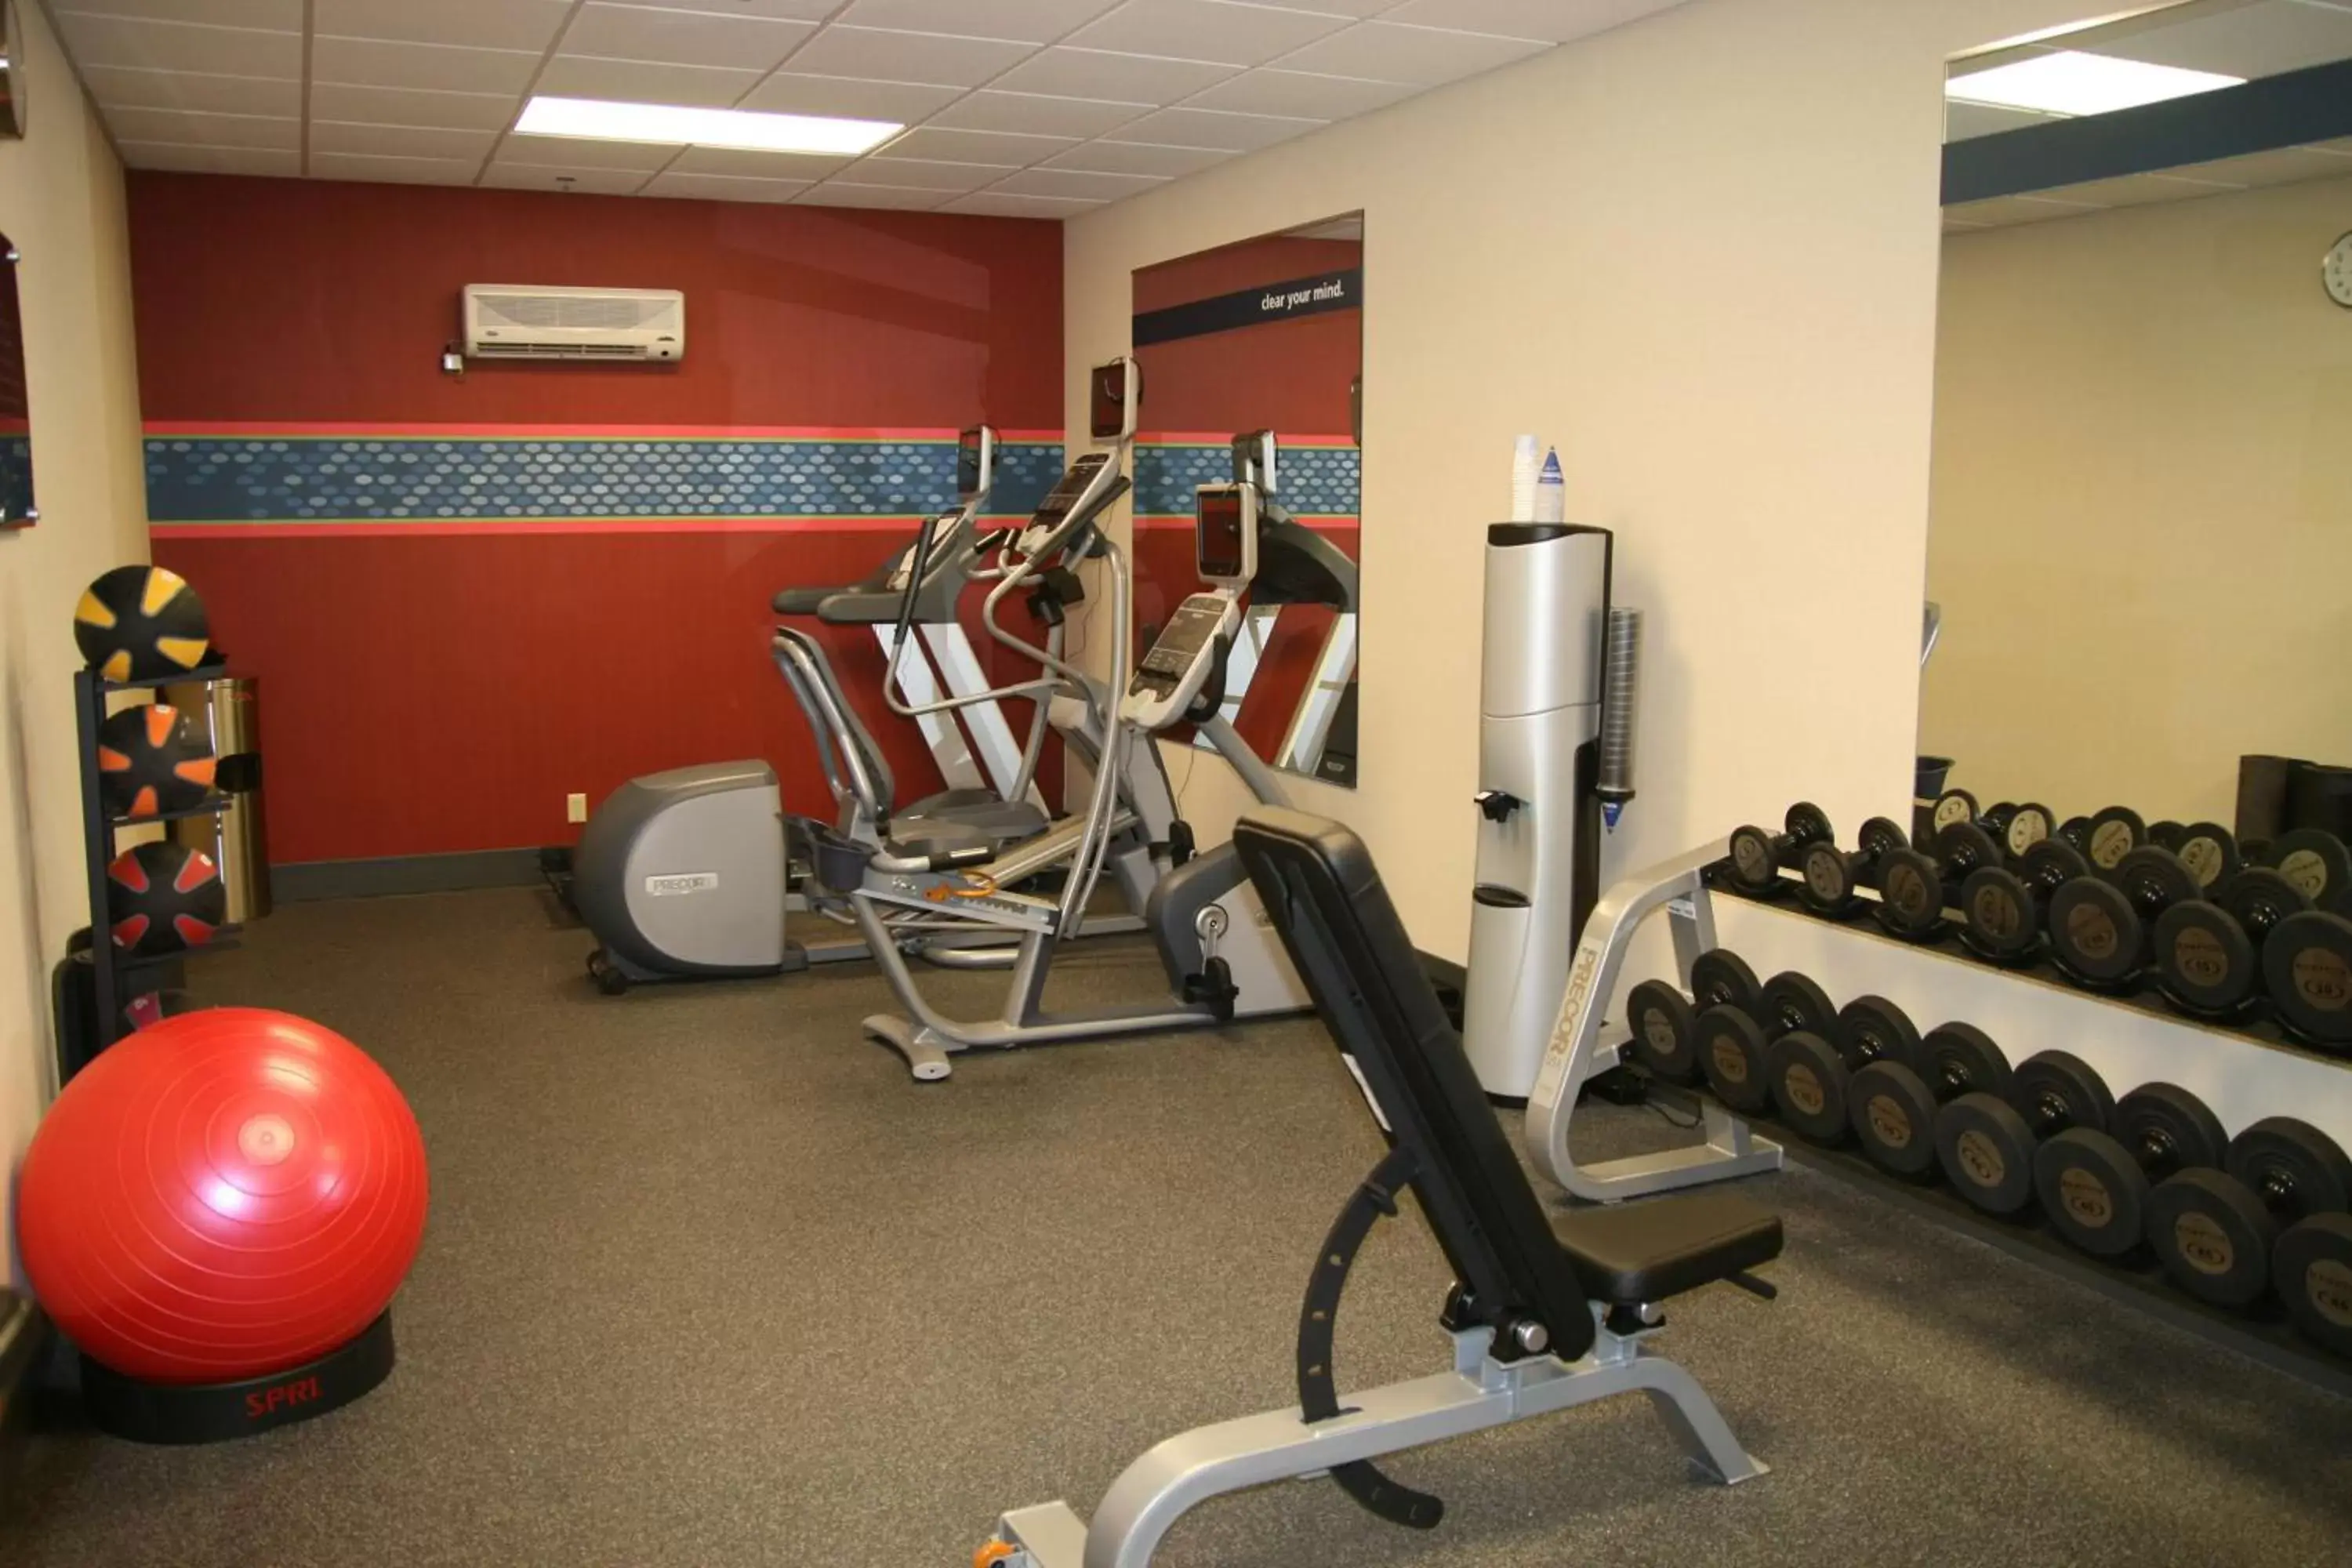 Fitness centre/facilities, Fitness Center/Facilities in Hampton Inn & Suites, Springfield SW